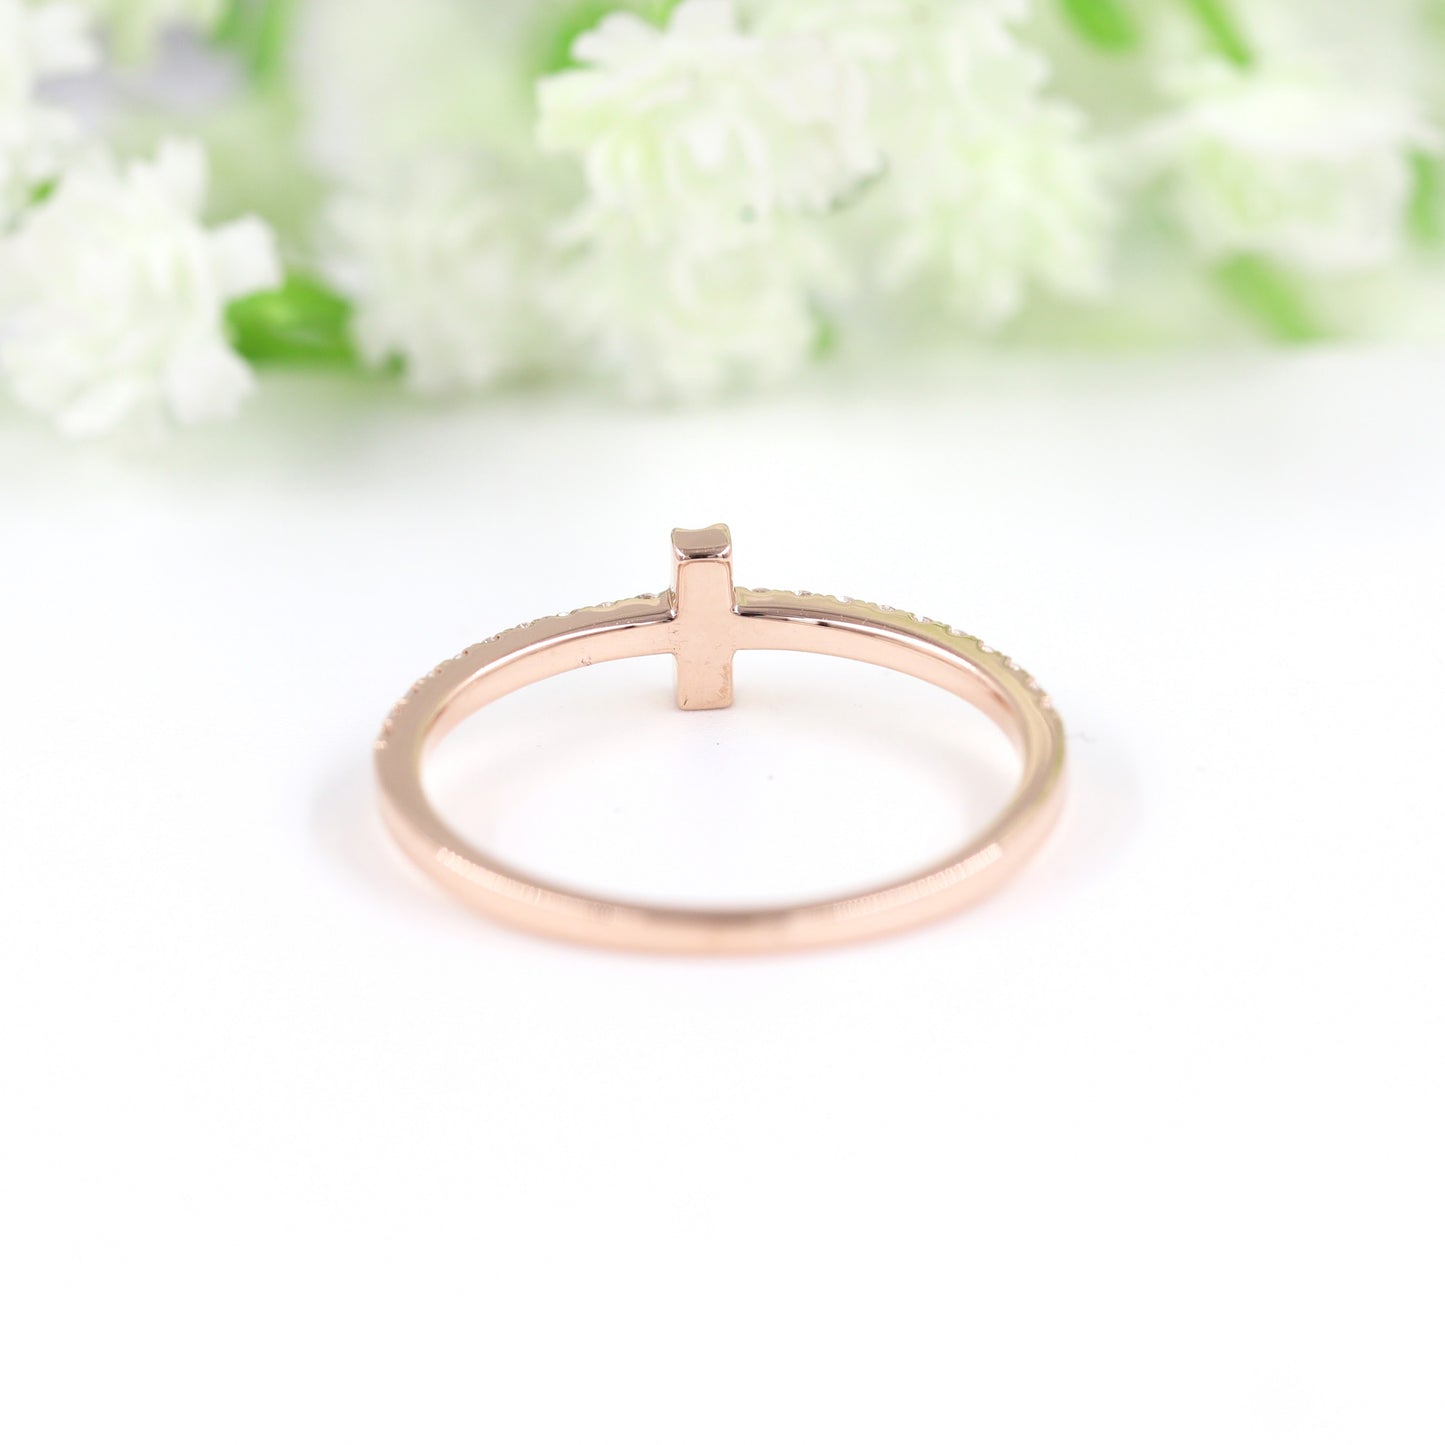 Dainty Diamond Ring / Anniversary Diamond Ring / 14K gold Diamond Ring / Religious Ring / Holy Cross Ring / Minimalist Ring / Gift for her